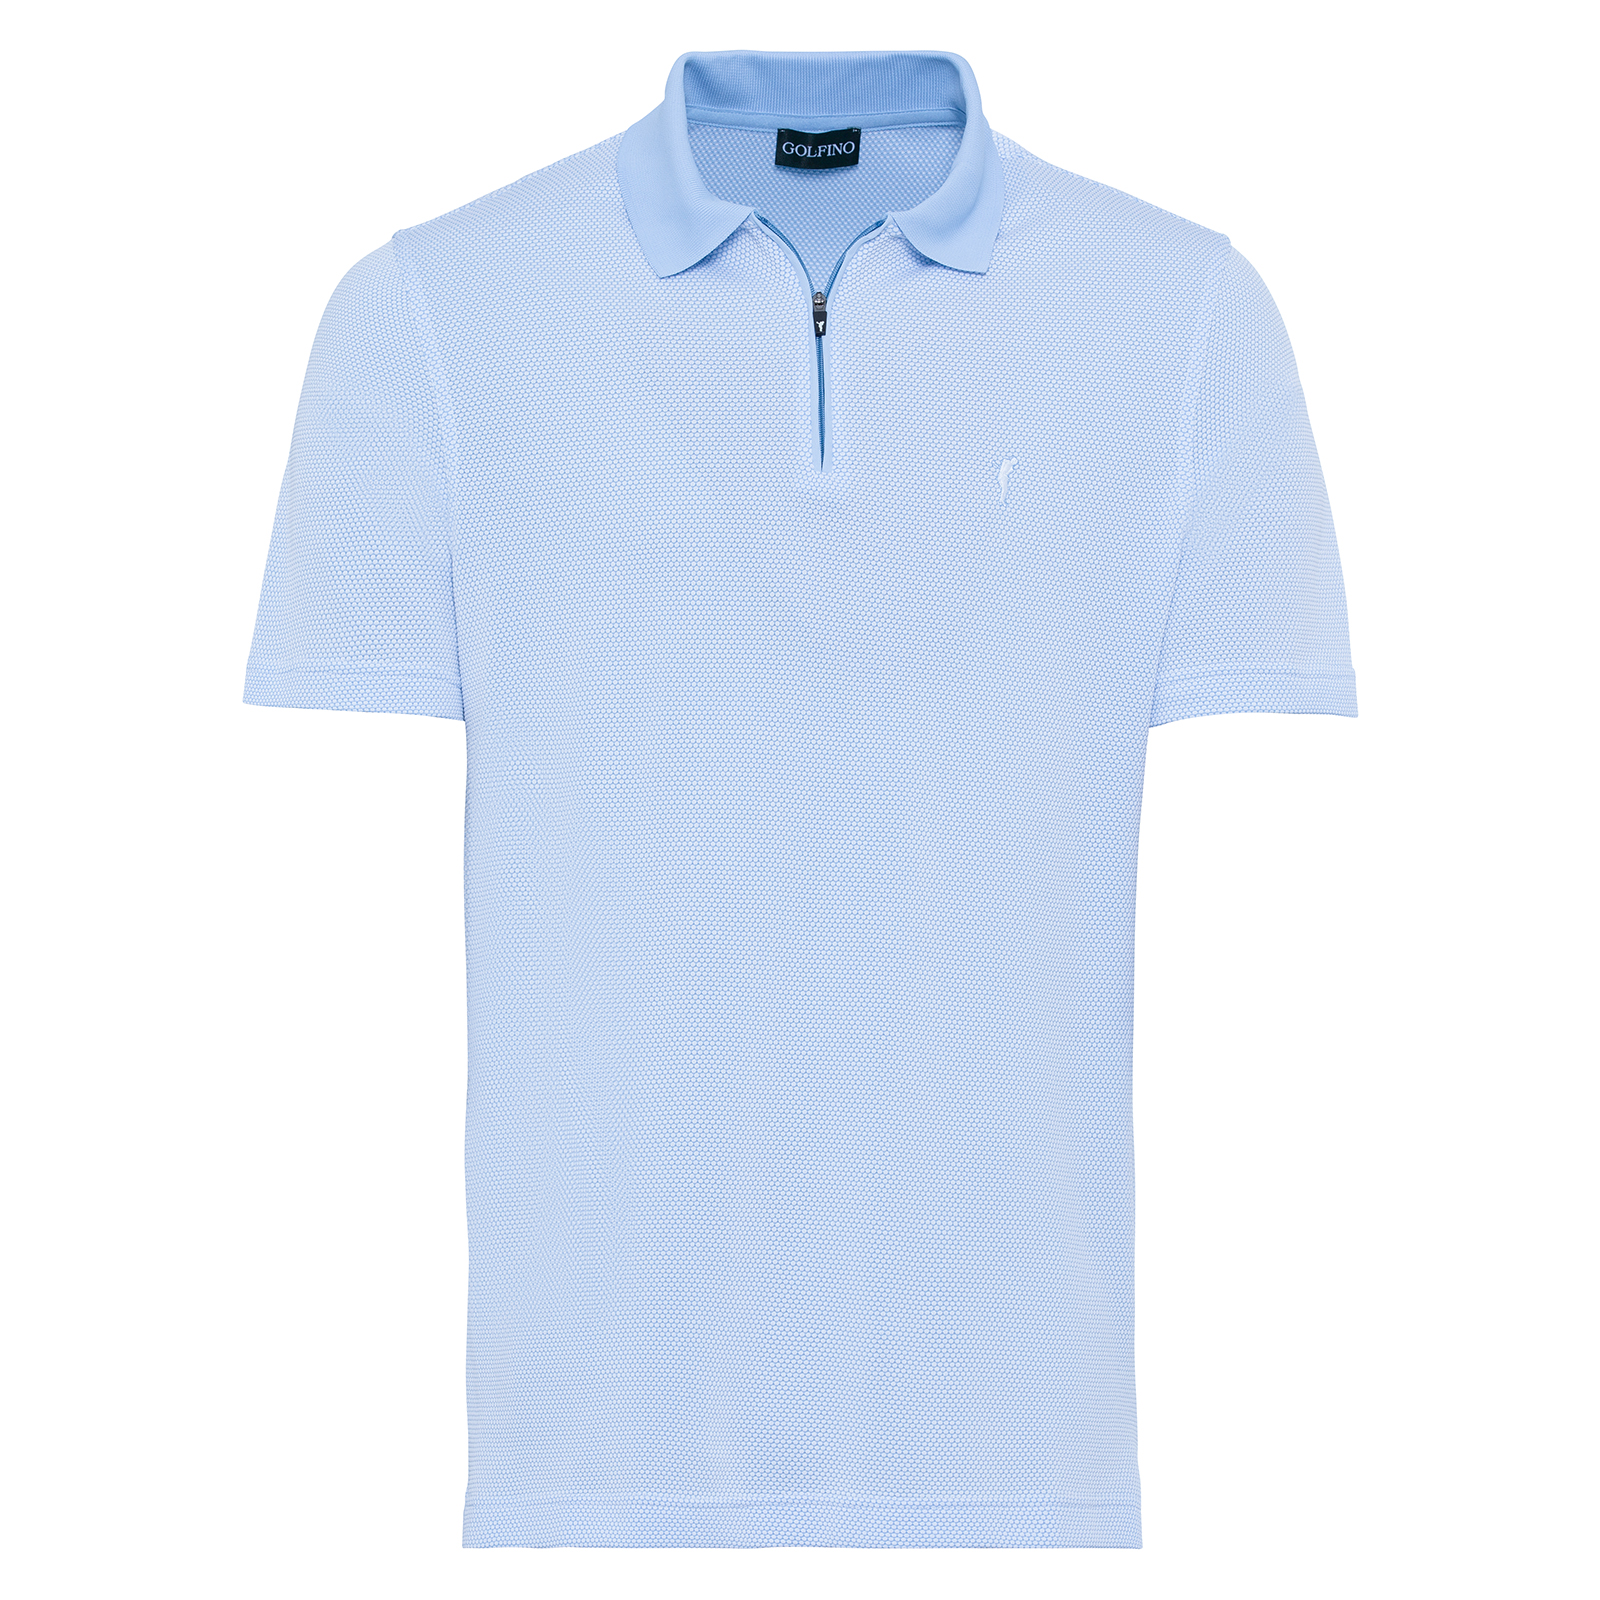 Men's golf polo shirt, moisture-regulating, made from bubble Jacquard